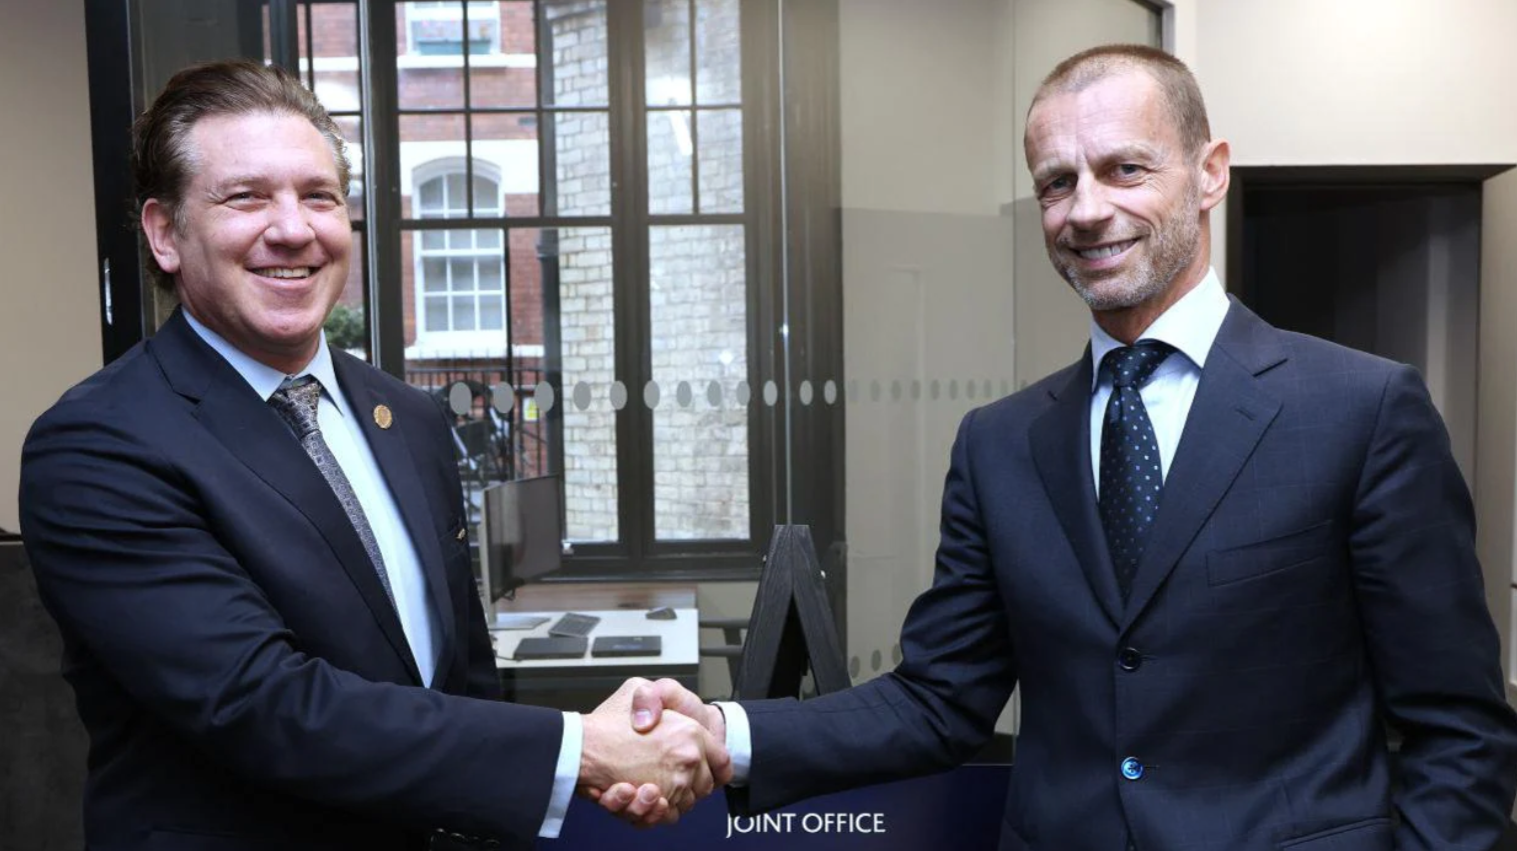 Alejandro Domínguez, left, and Aleksander Čeferin opened the office in London ©UEFA